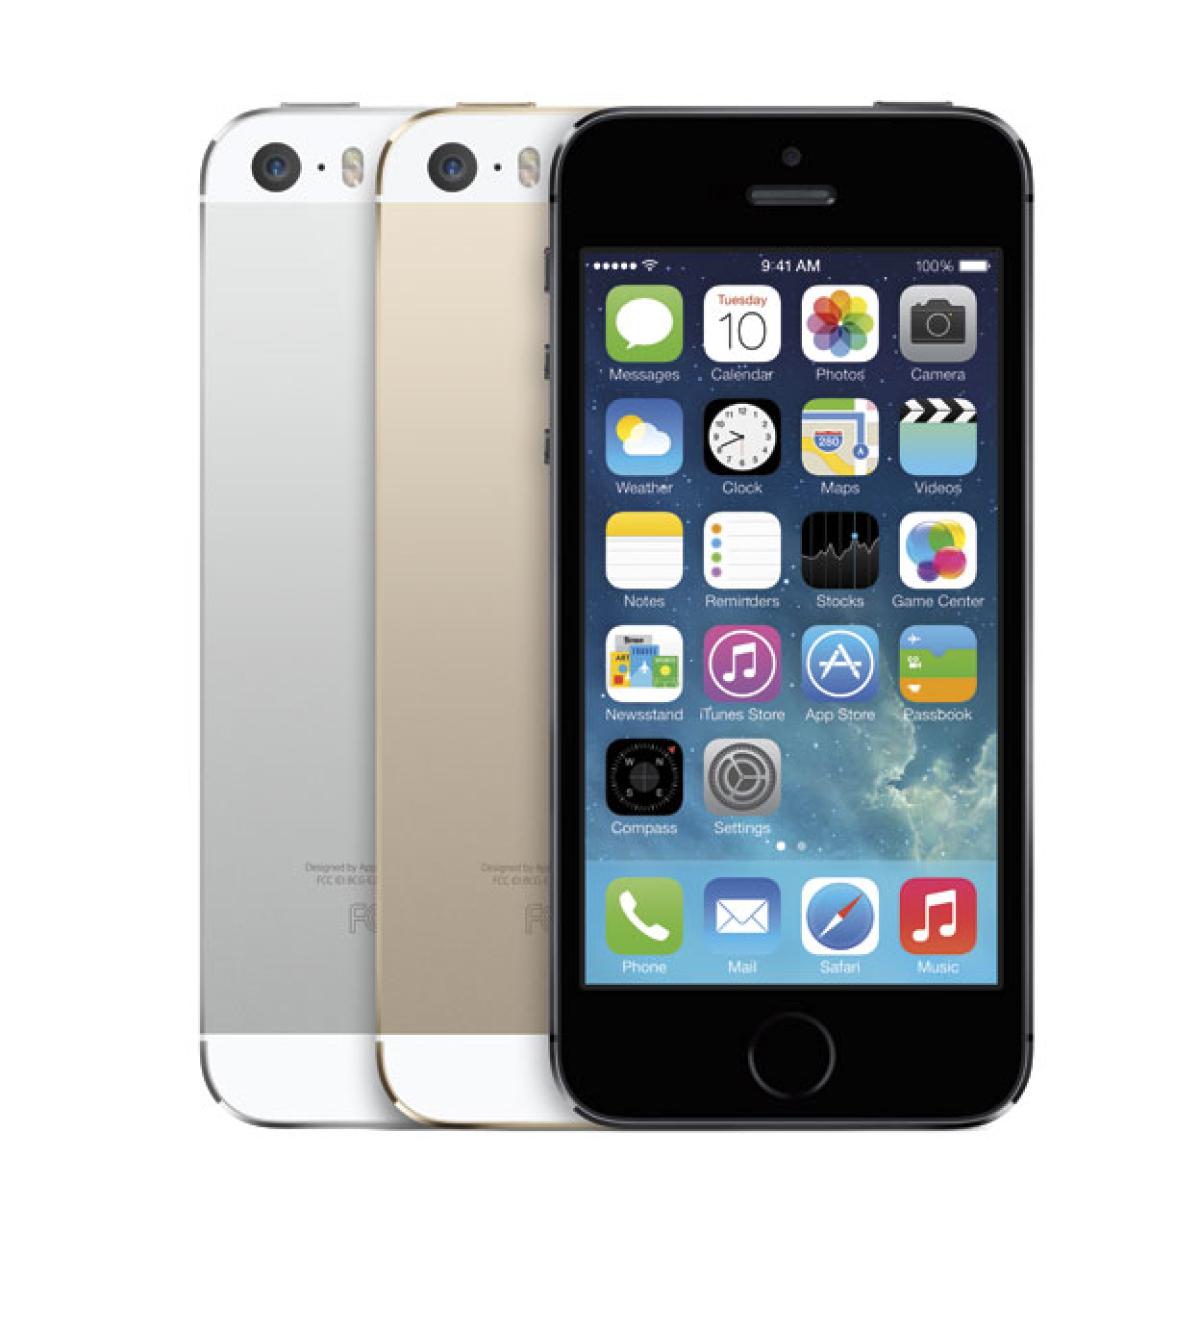 IPhone 5s/5 protección for iPhone color gris oscuro funda bumper 